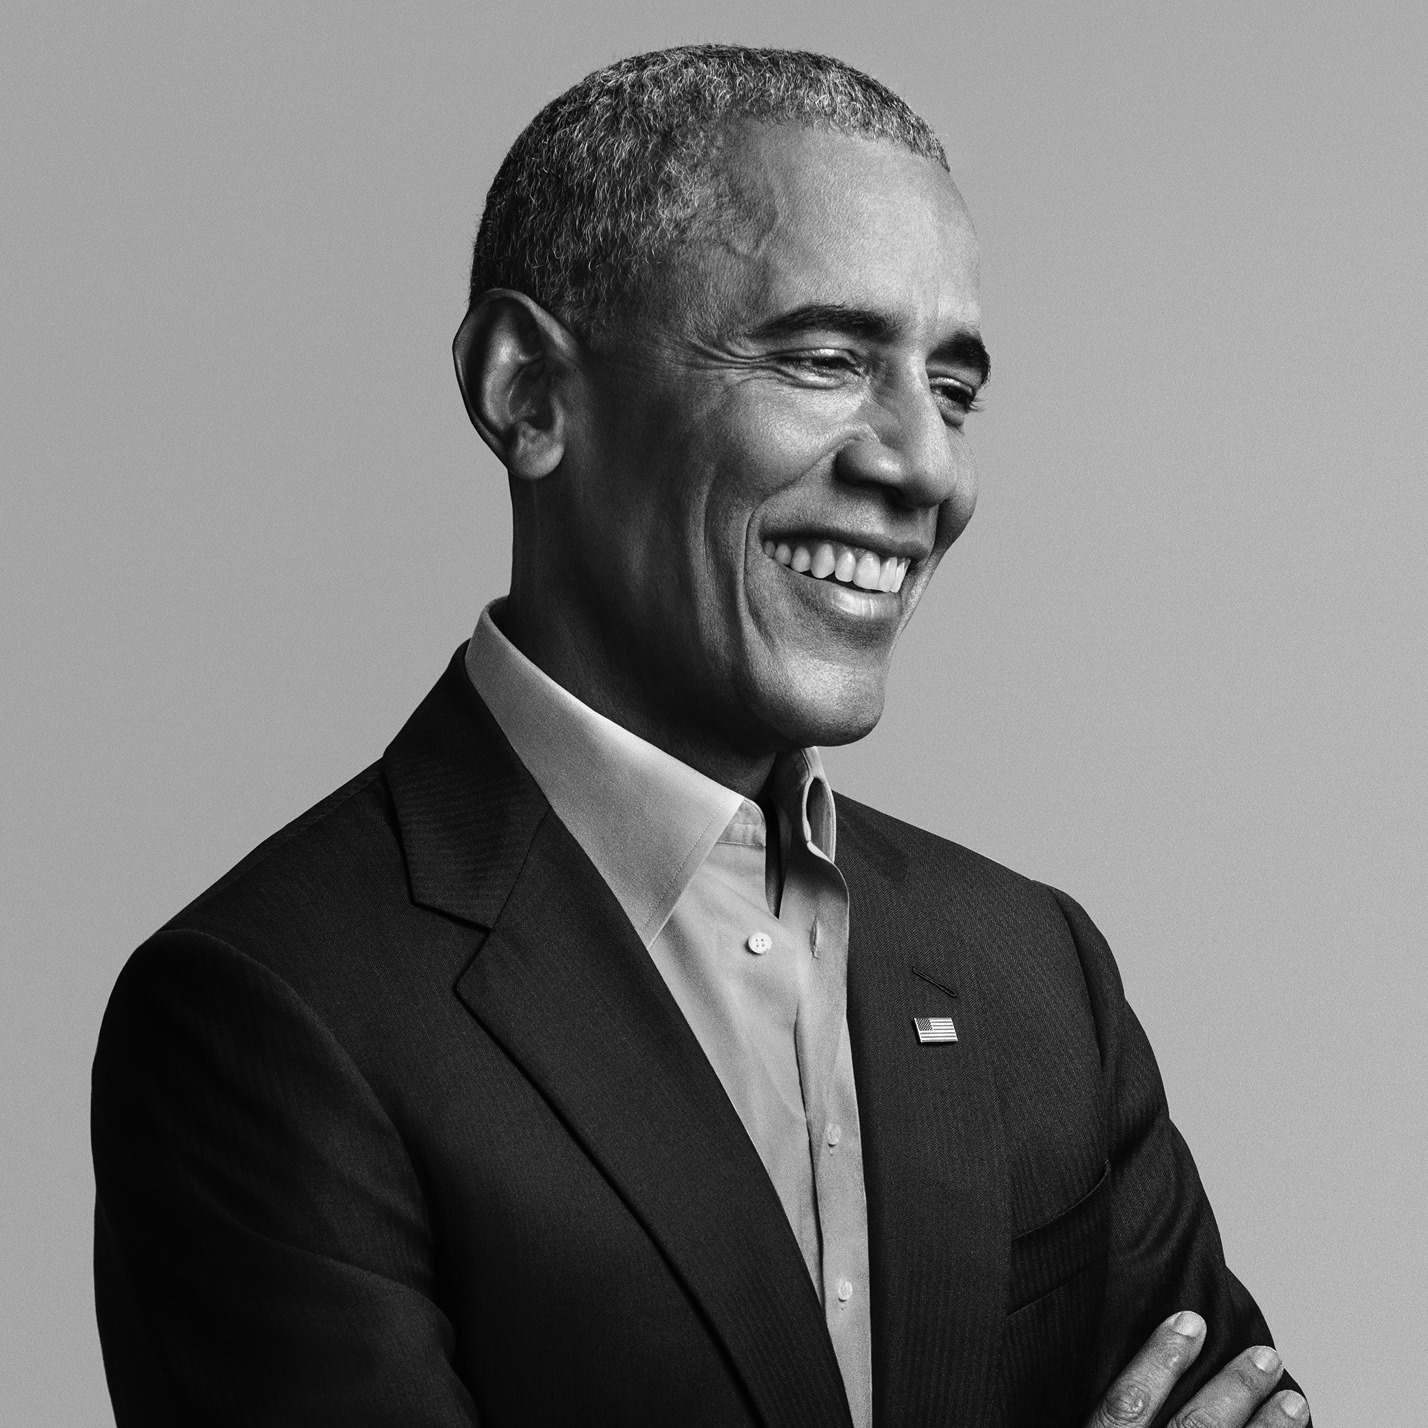 Barack Obama avatar on Facebook